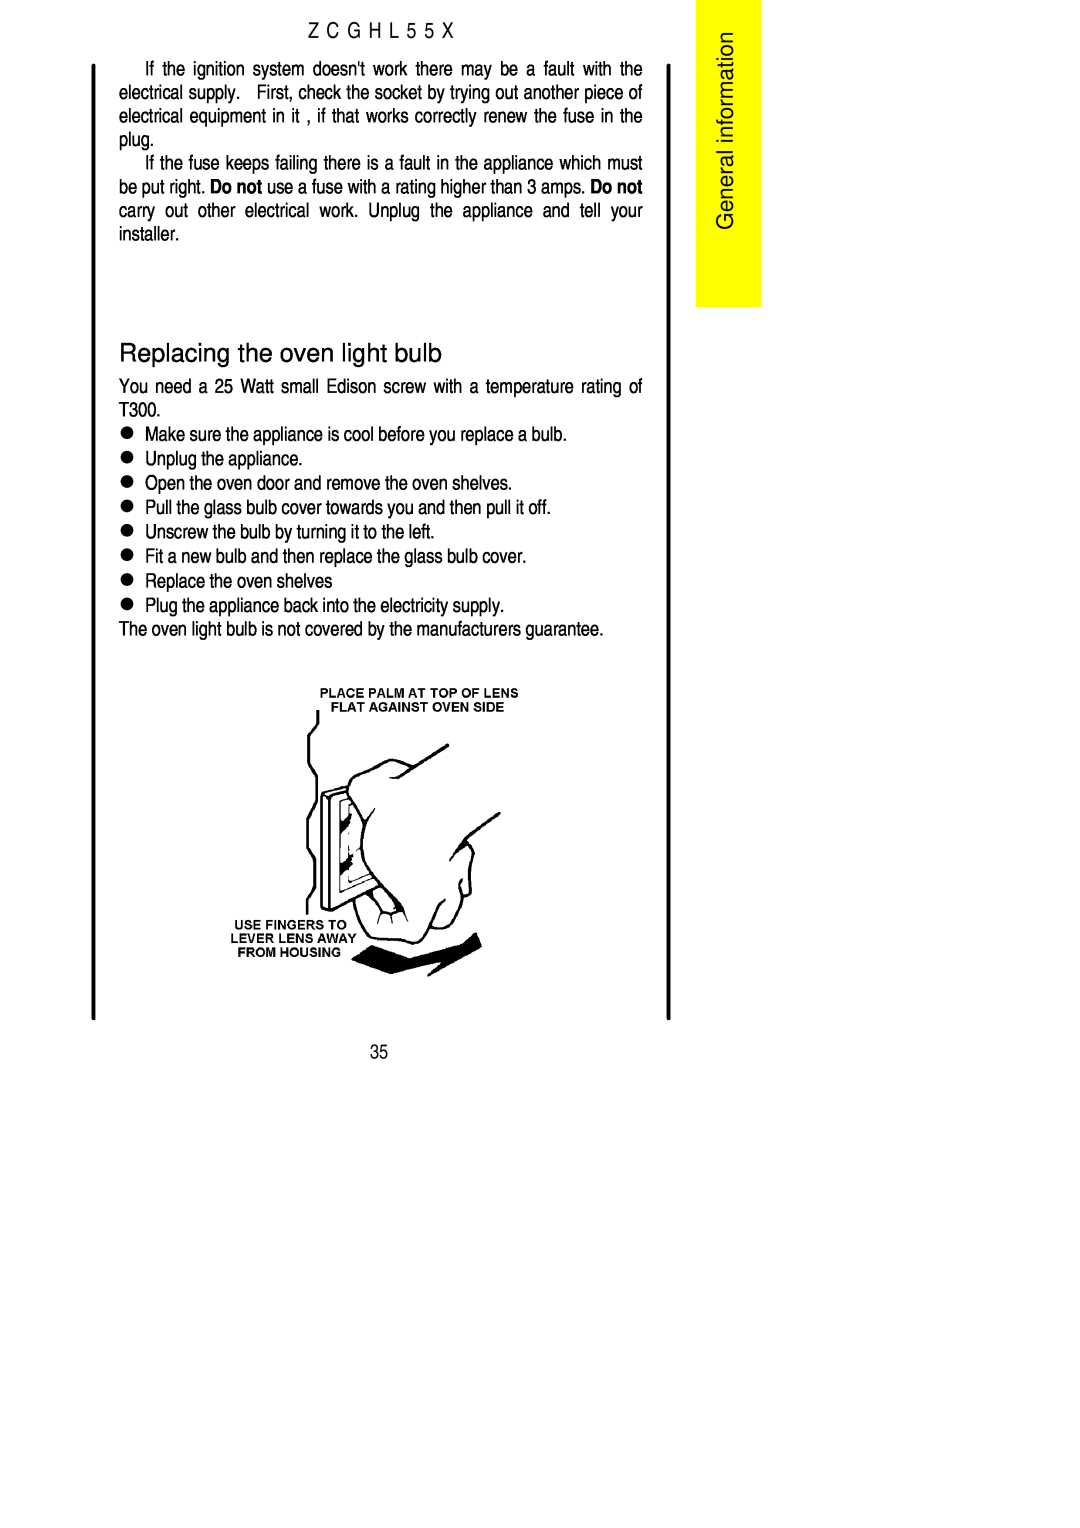 Zanussi ZCGHL55X manual Replacing the oven light bulb, General information, Z C G H L 